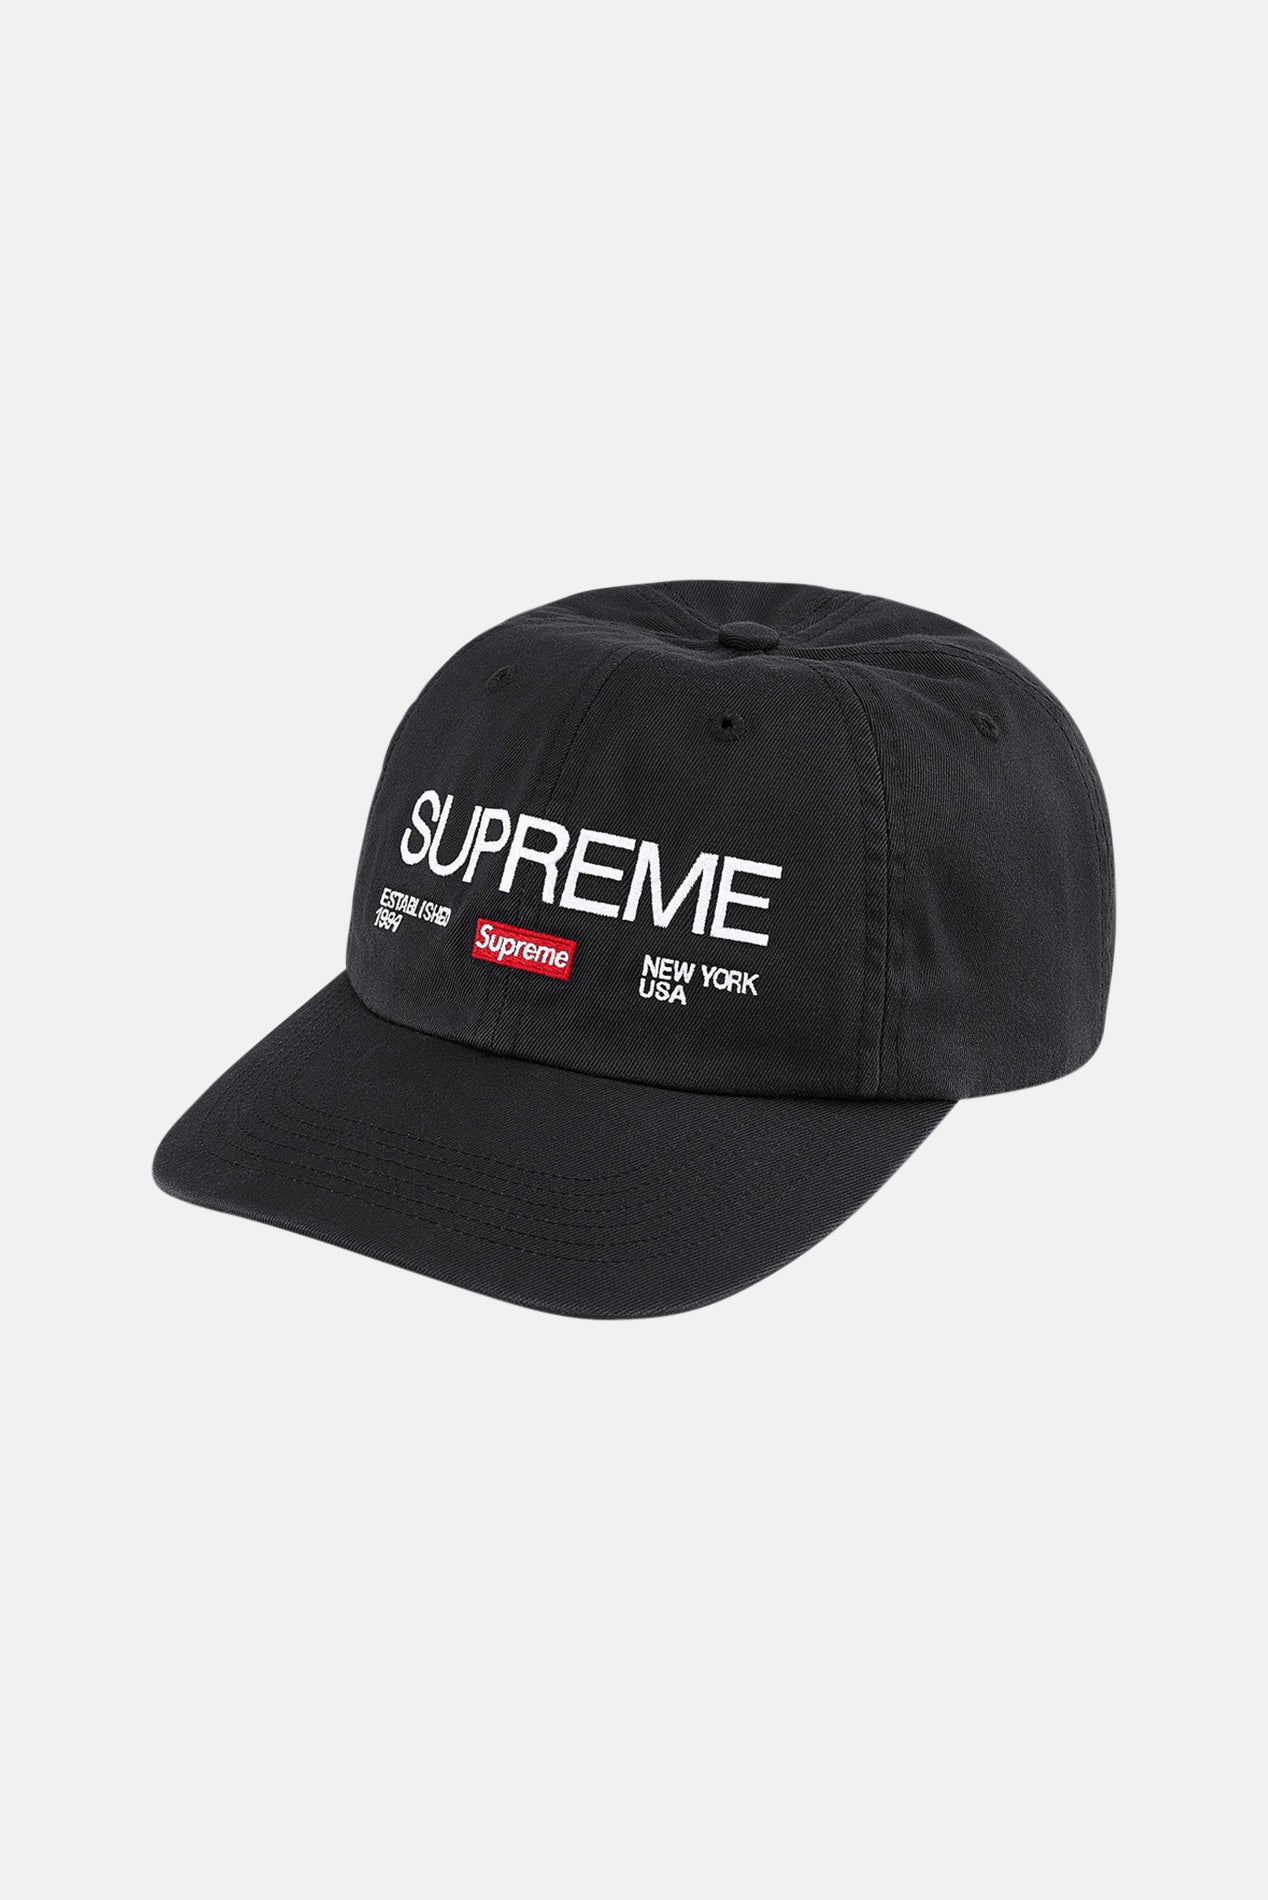 Supreme Est. 1994 6-Panel Black Hat